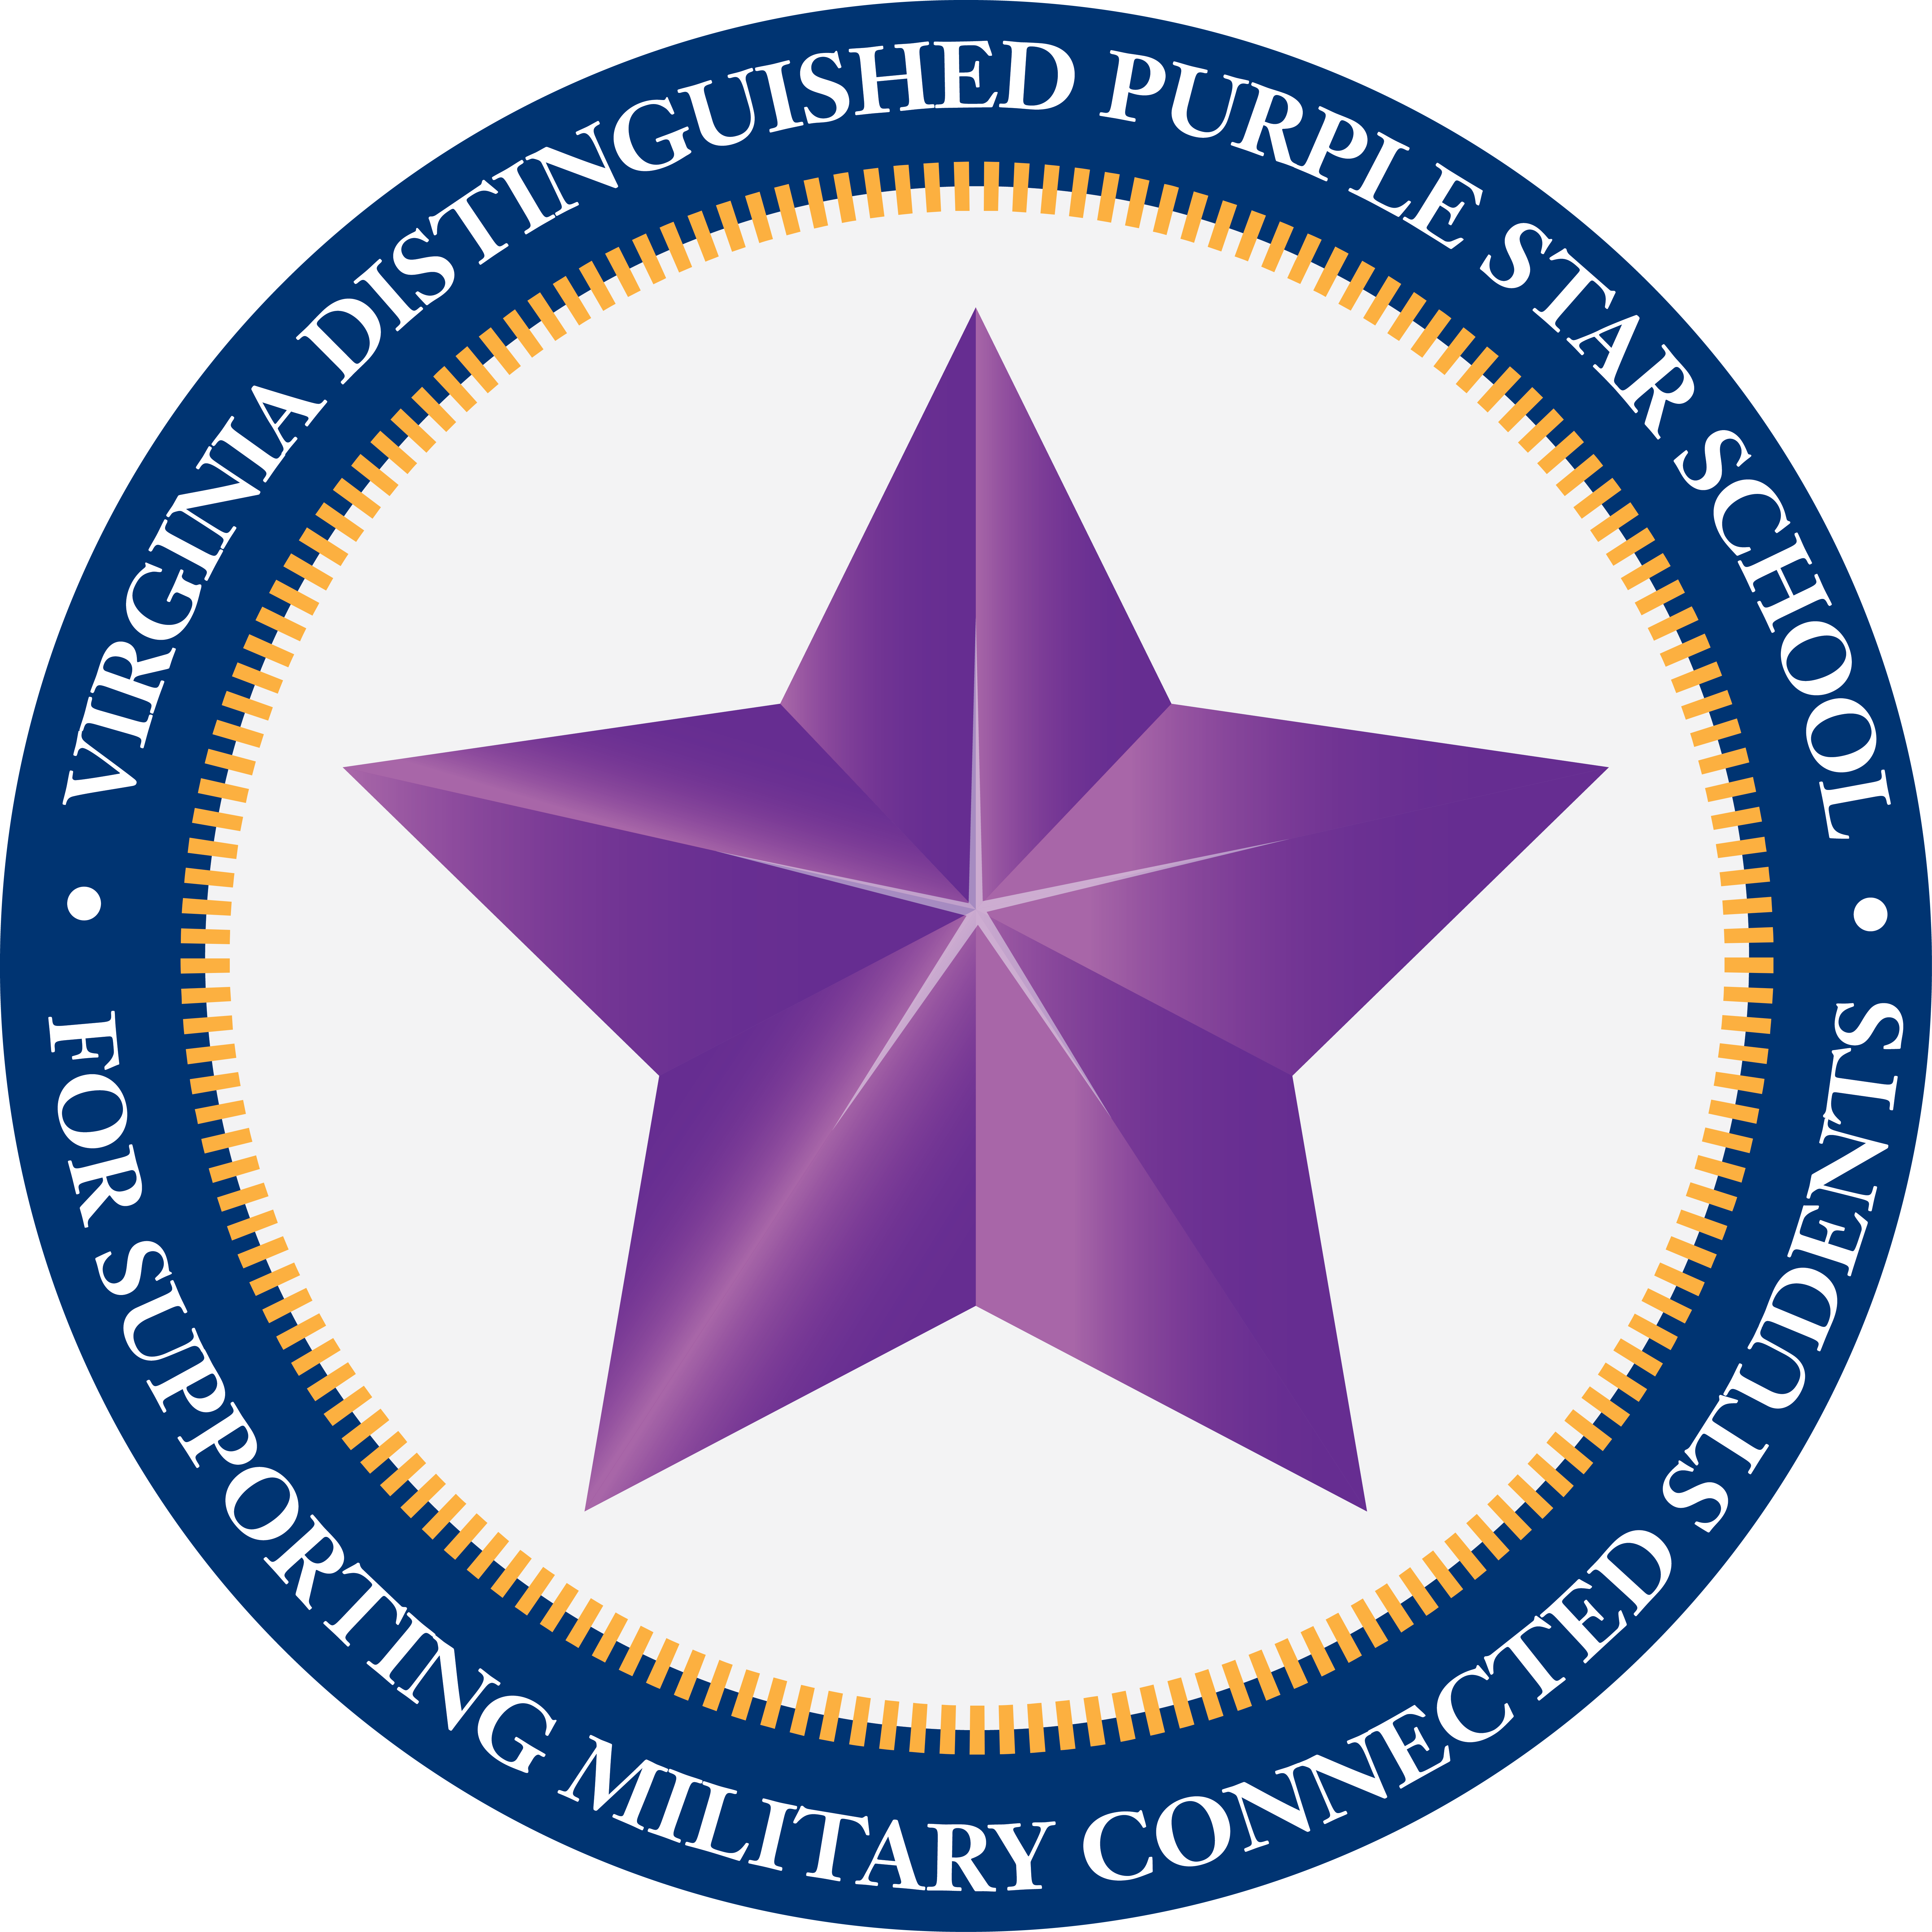 Purple star symbol